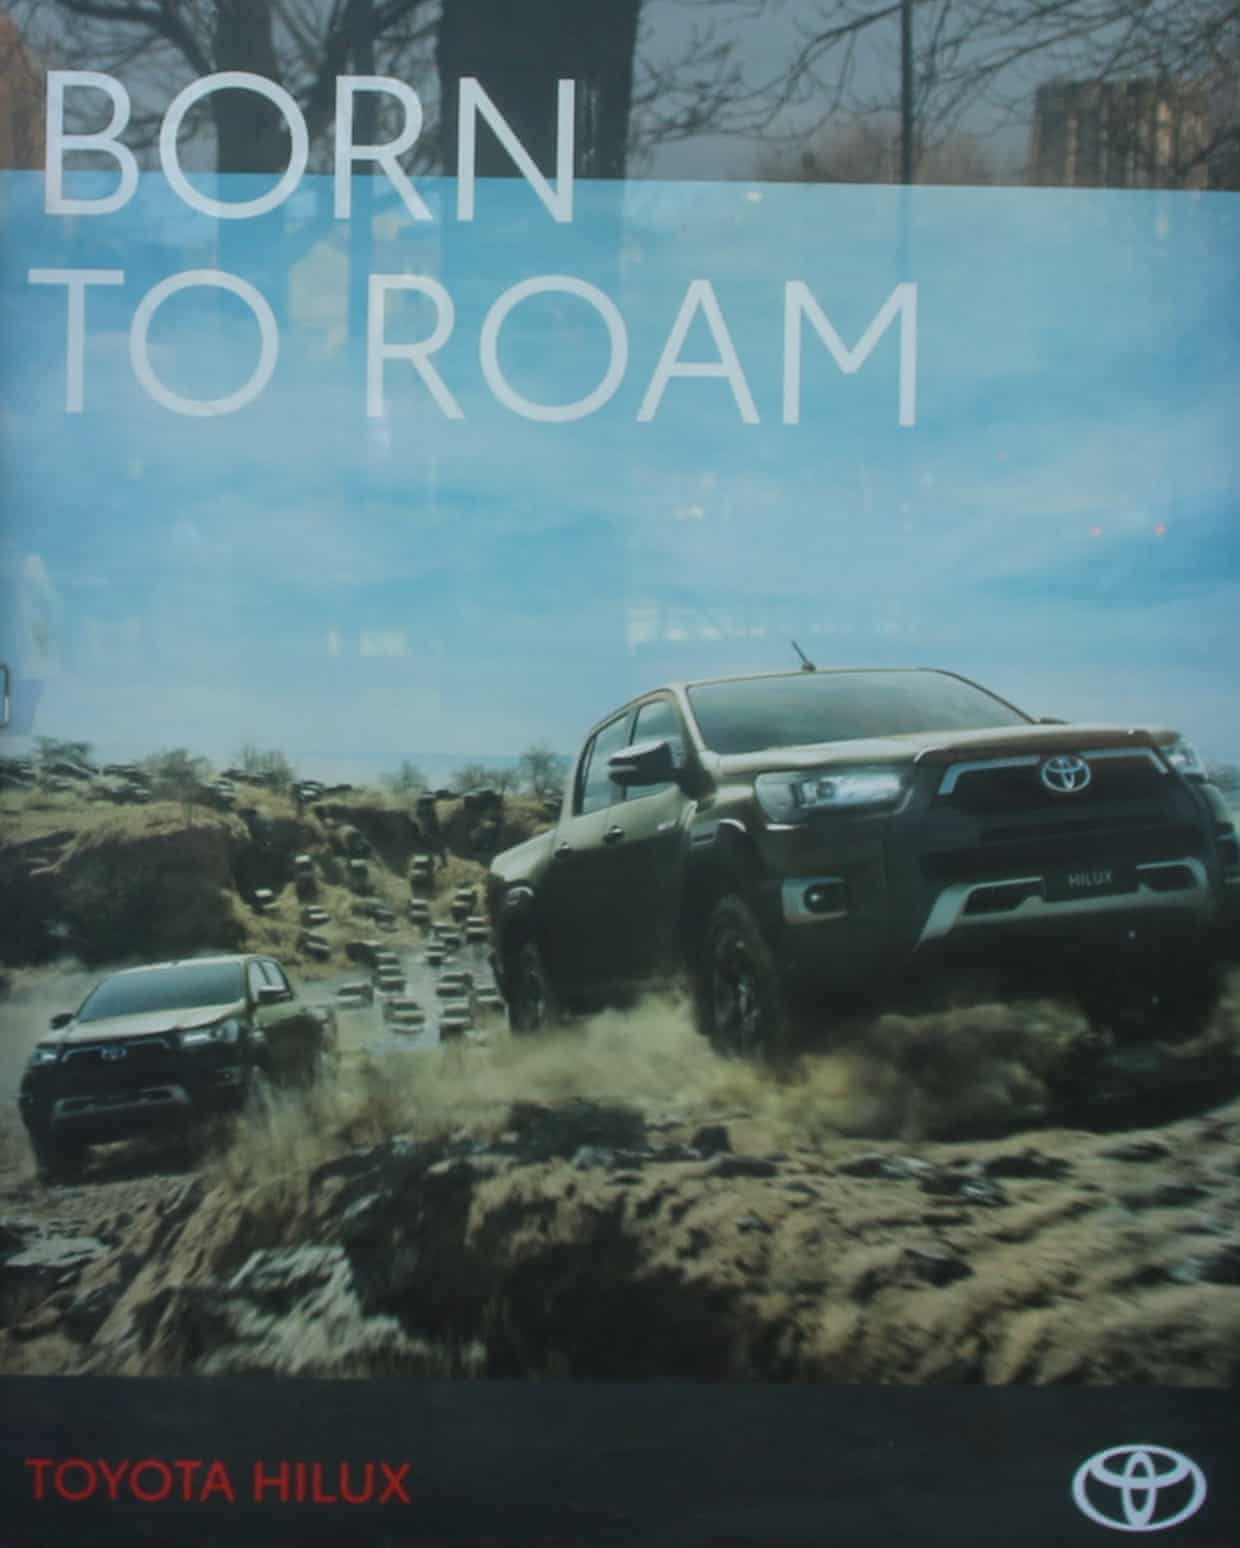 Born to Roam